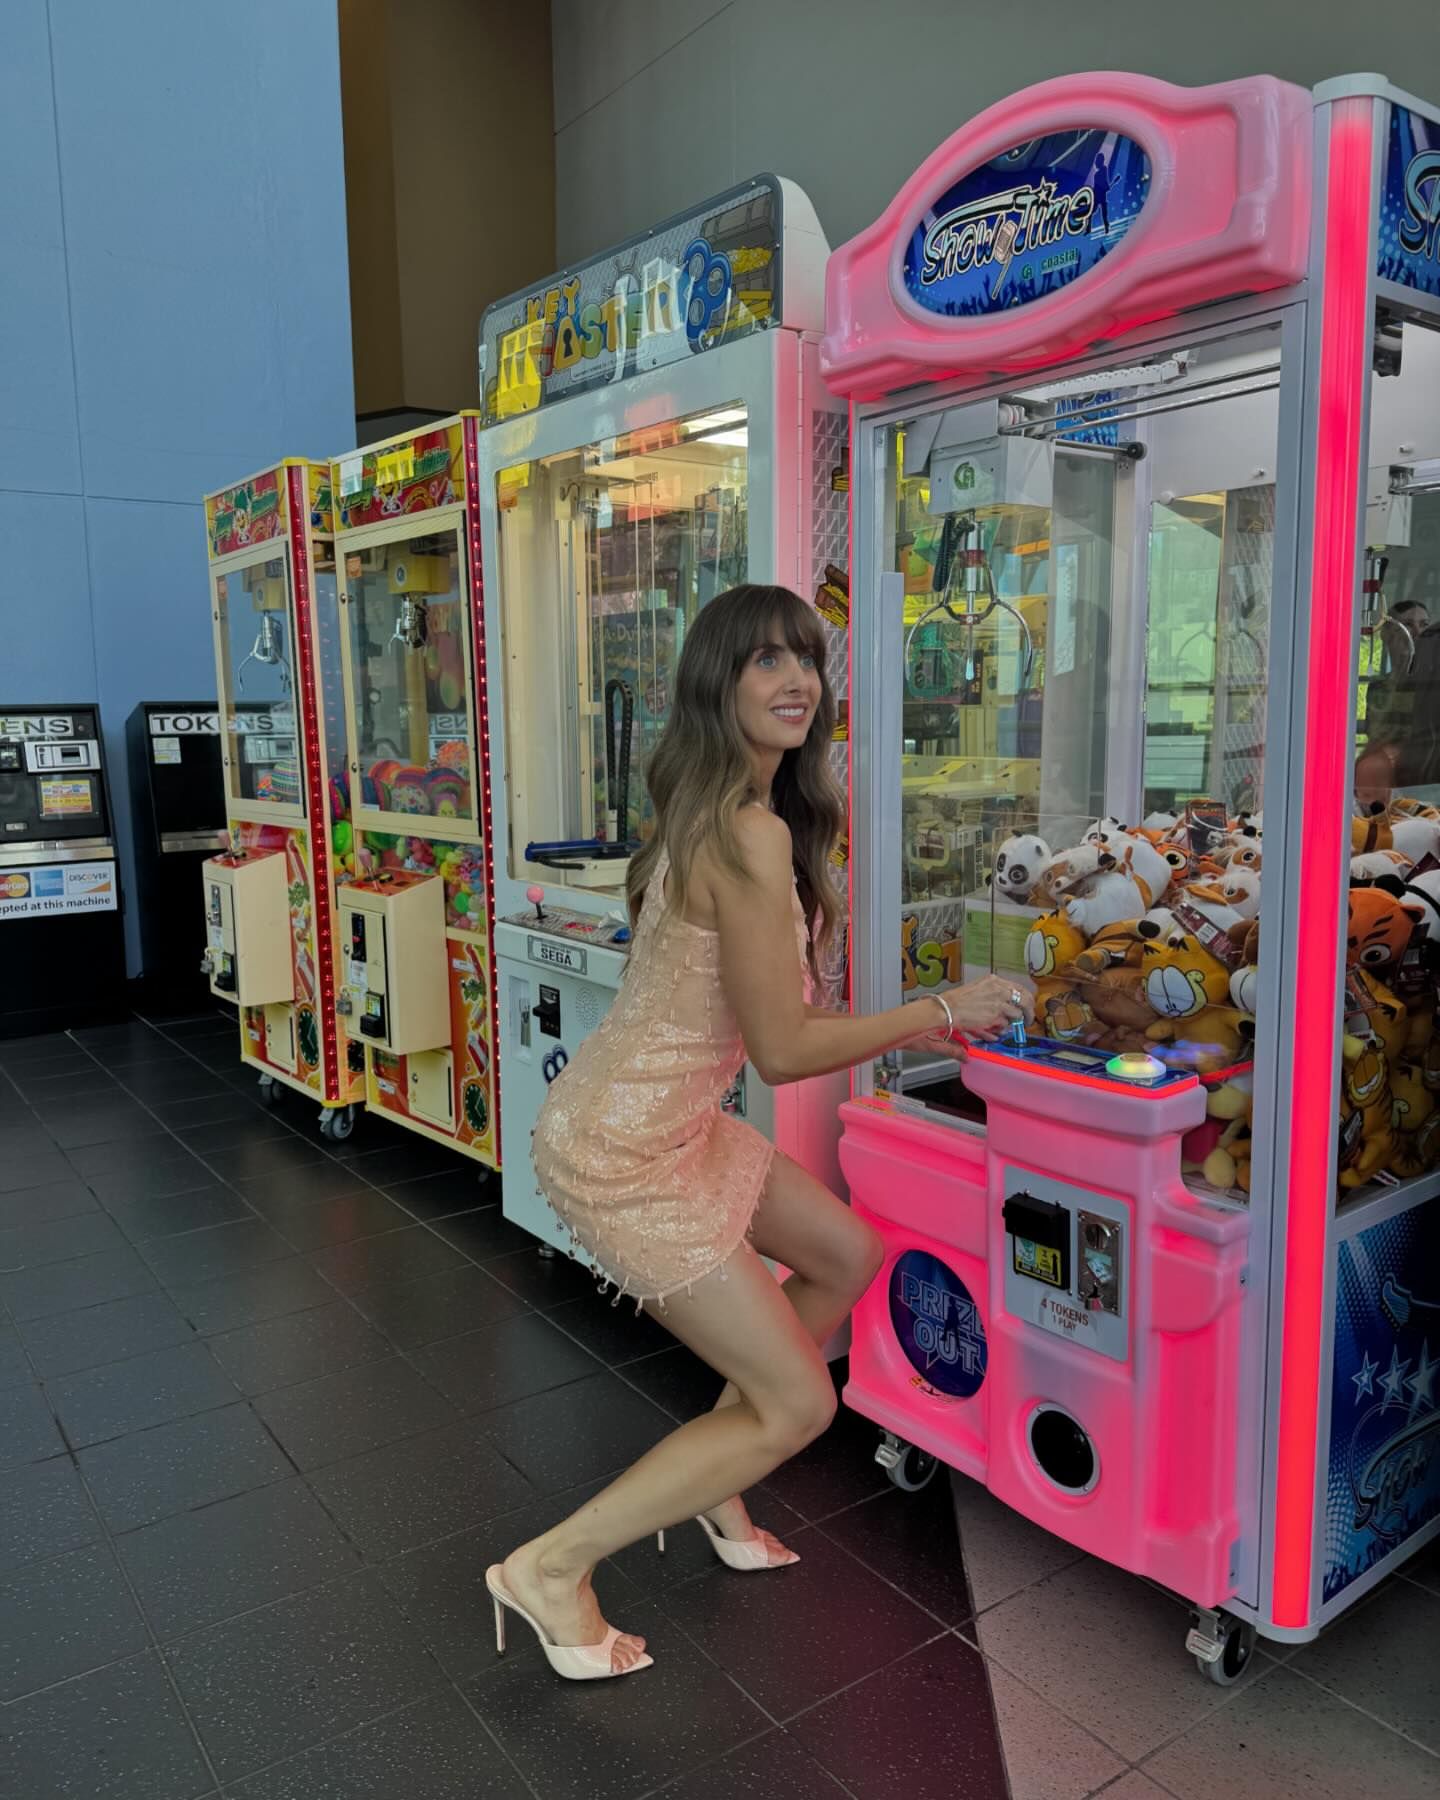 Alison Brie Plays Arcade Games in Miami! - Photo 3